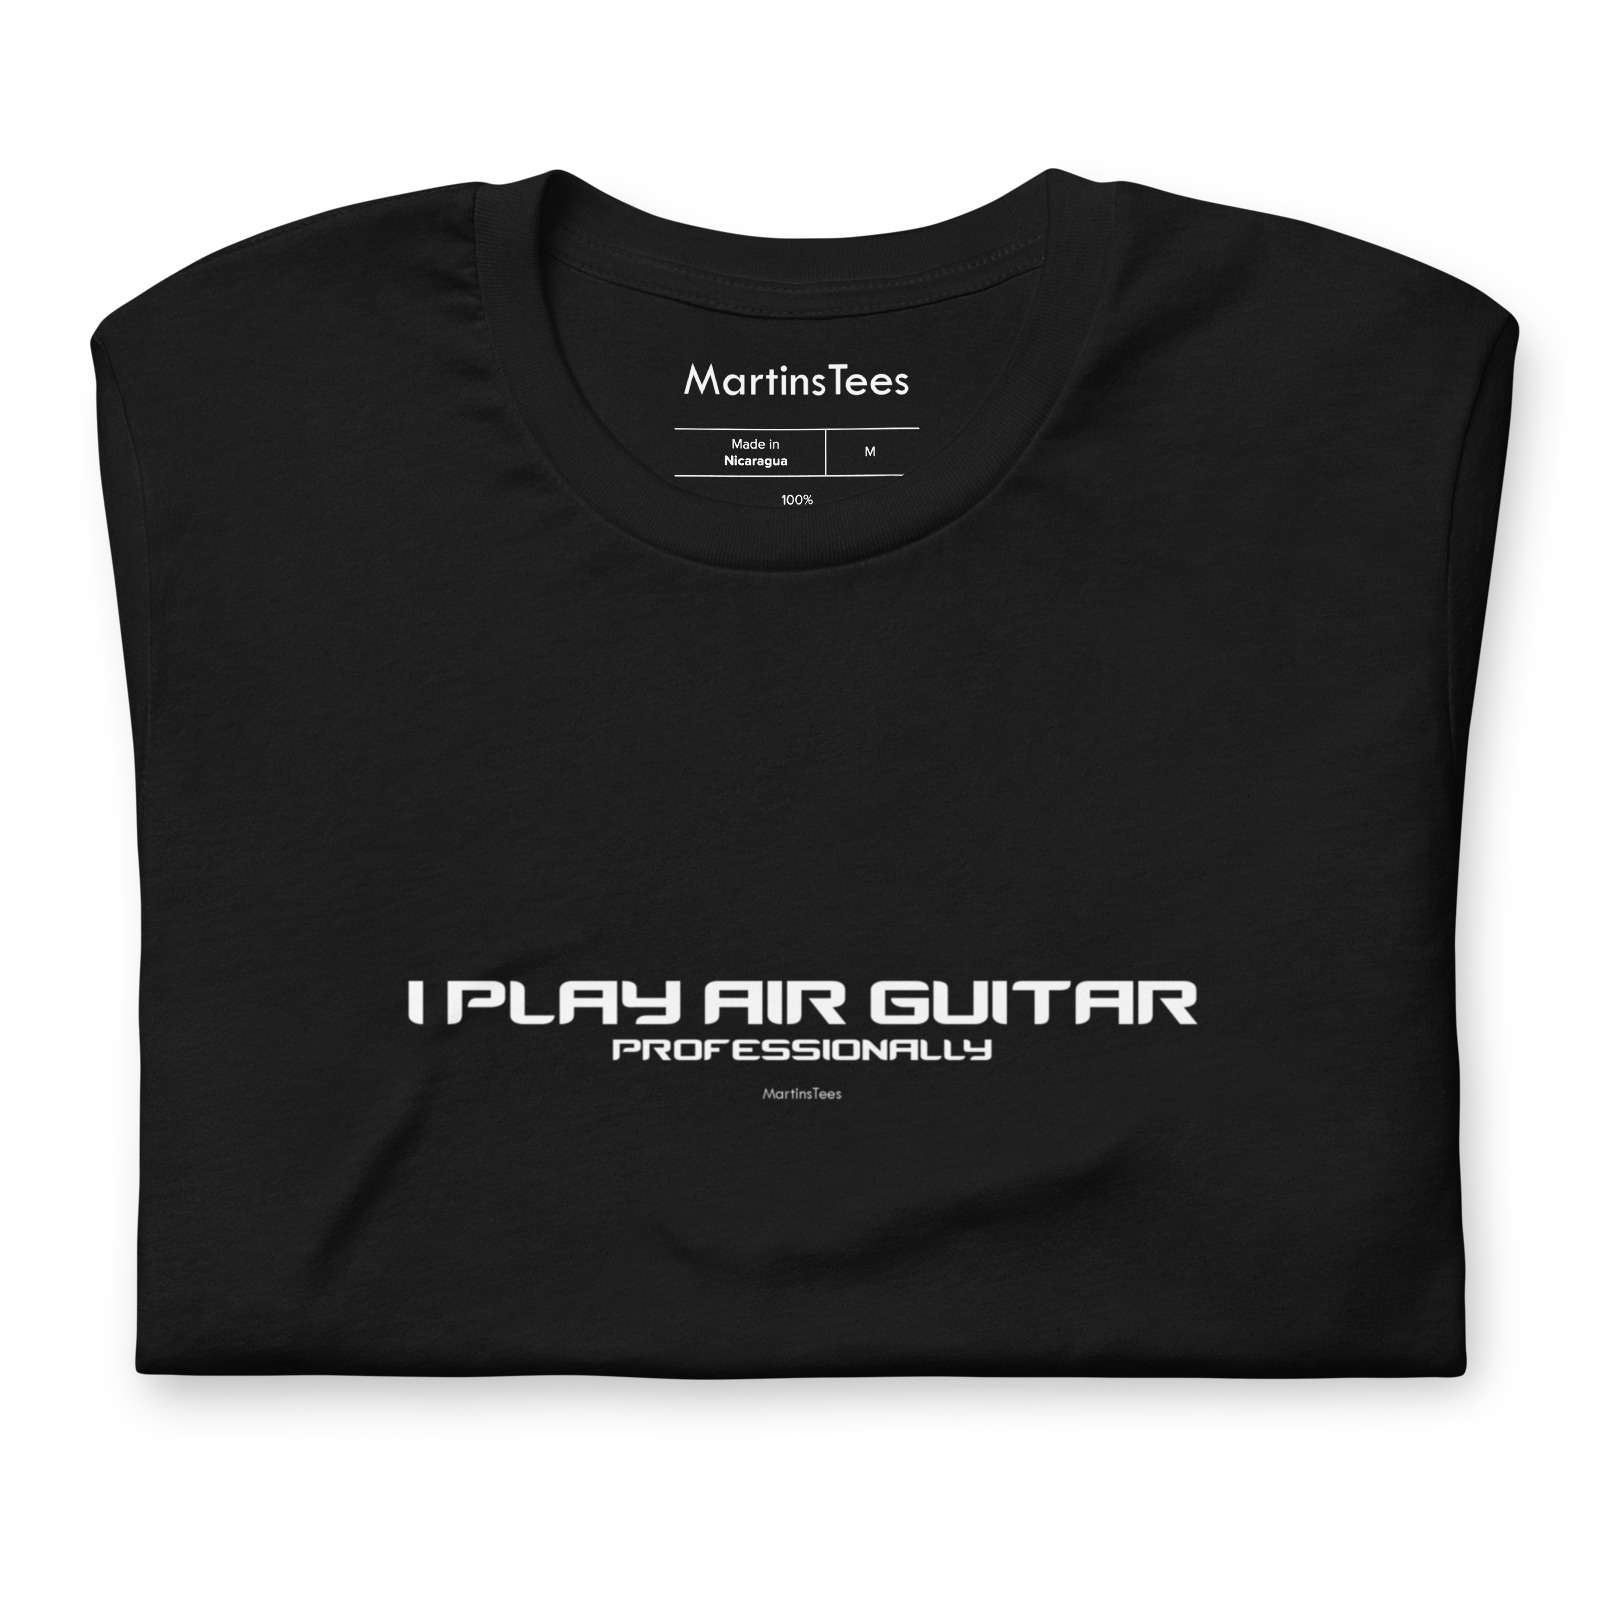 T-shirt: I PLAY AIR GUITAR - PROFESSIONALLY